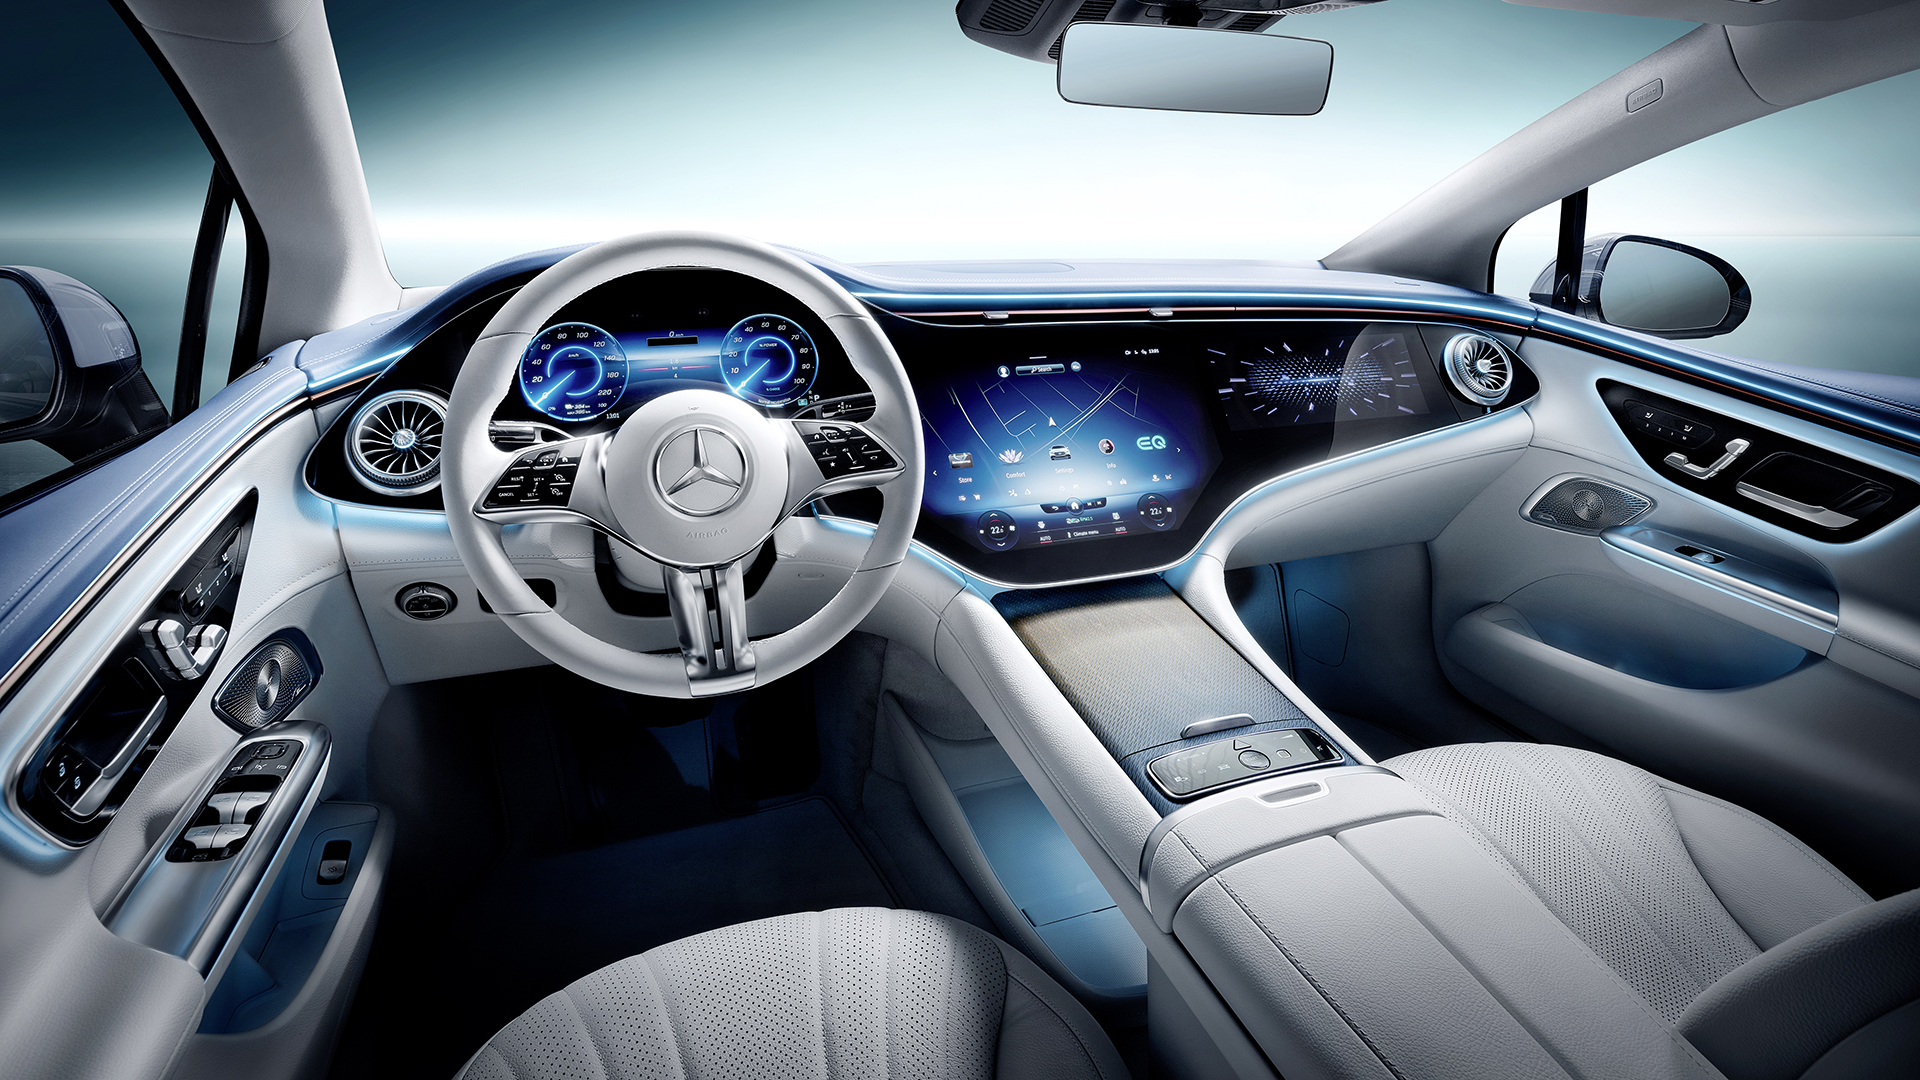 Mercedes-EQ. EQE 350, Edition 1, AMG Line, Interieur: Leder nevagrau/reflexblau (Stromverbrauch nach WLTP: 19,3-15,7 kWh/100 km; CO2-Emissionen: 0 g/km);Stromverbrauch nach WLTP: 19,3-15,7 kWh/100 km; CO2-Emissionen: 0 g/km*Mercedes-EQ. EQE 350, Edition 1, AMG Line, interior: leather neva grey/reflex blue (electrical consumption WLTP: 19,3-15,7 kWh/100 km; CO2 emissions: 0 g/km);Electrical consumption WLTP: 19,3-15,7 kWh/100 km; CO2 emissions: 0 g/km*